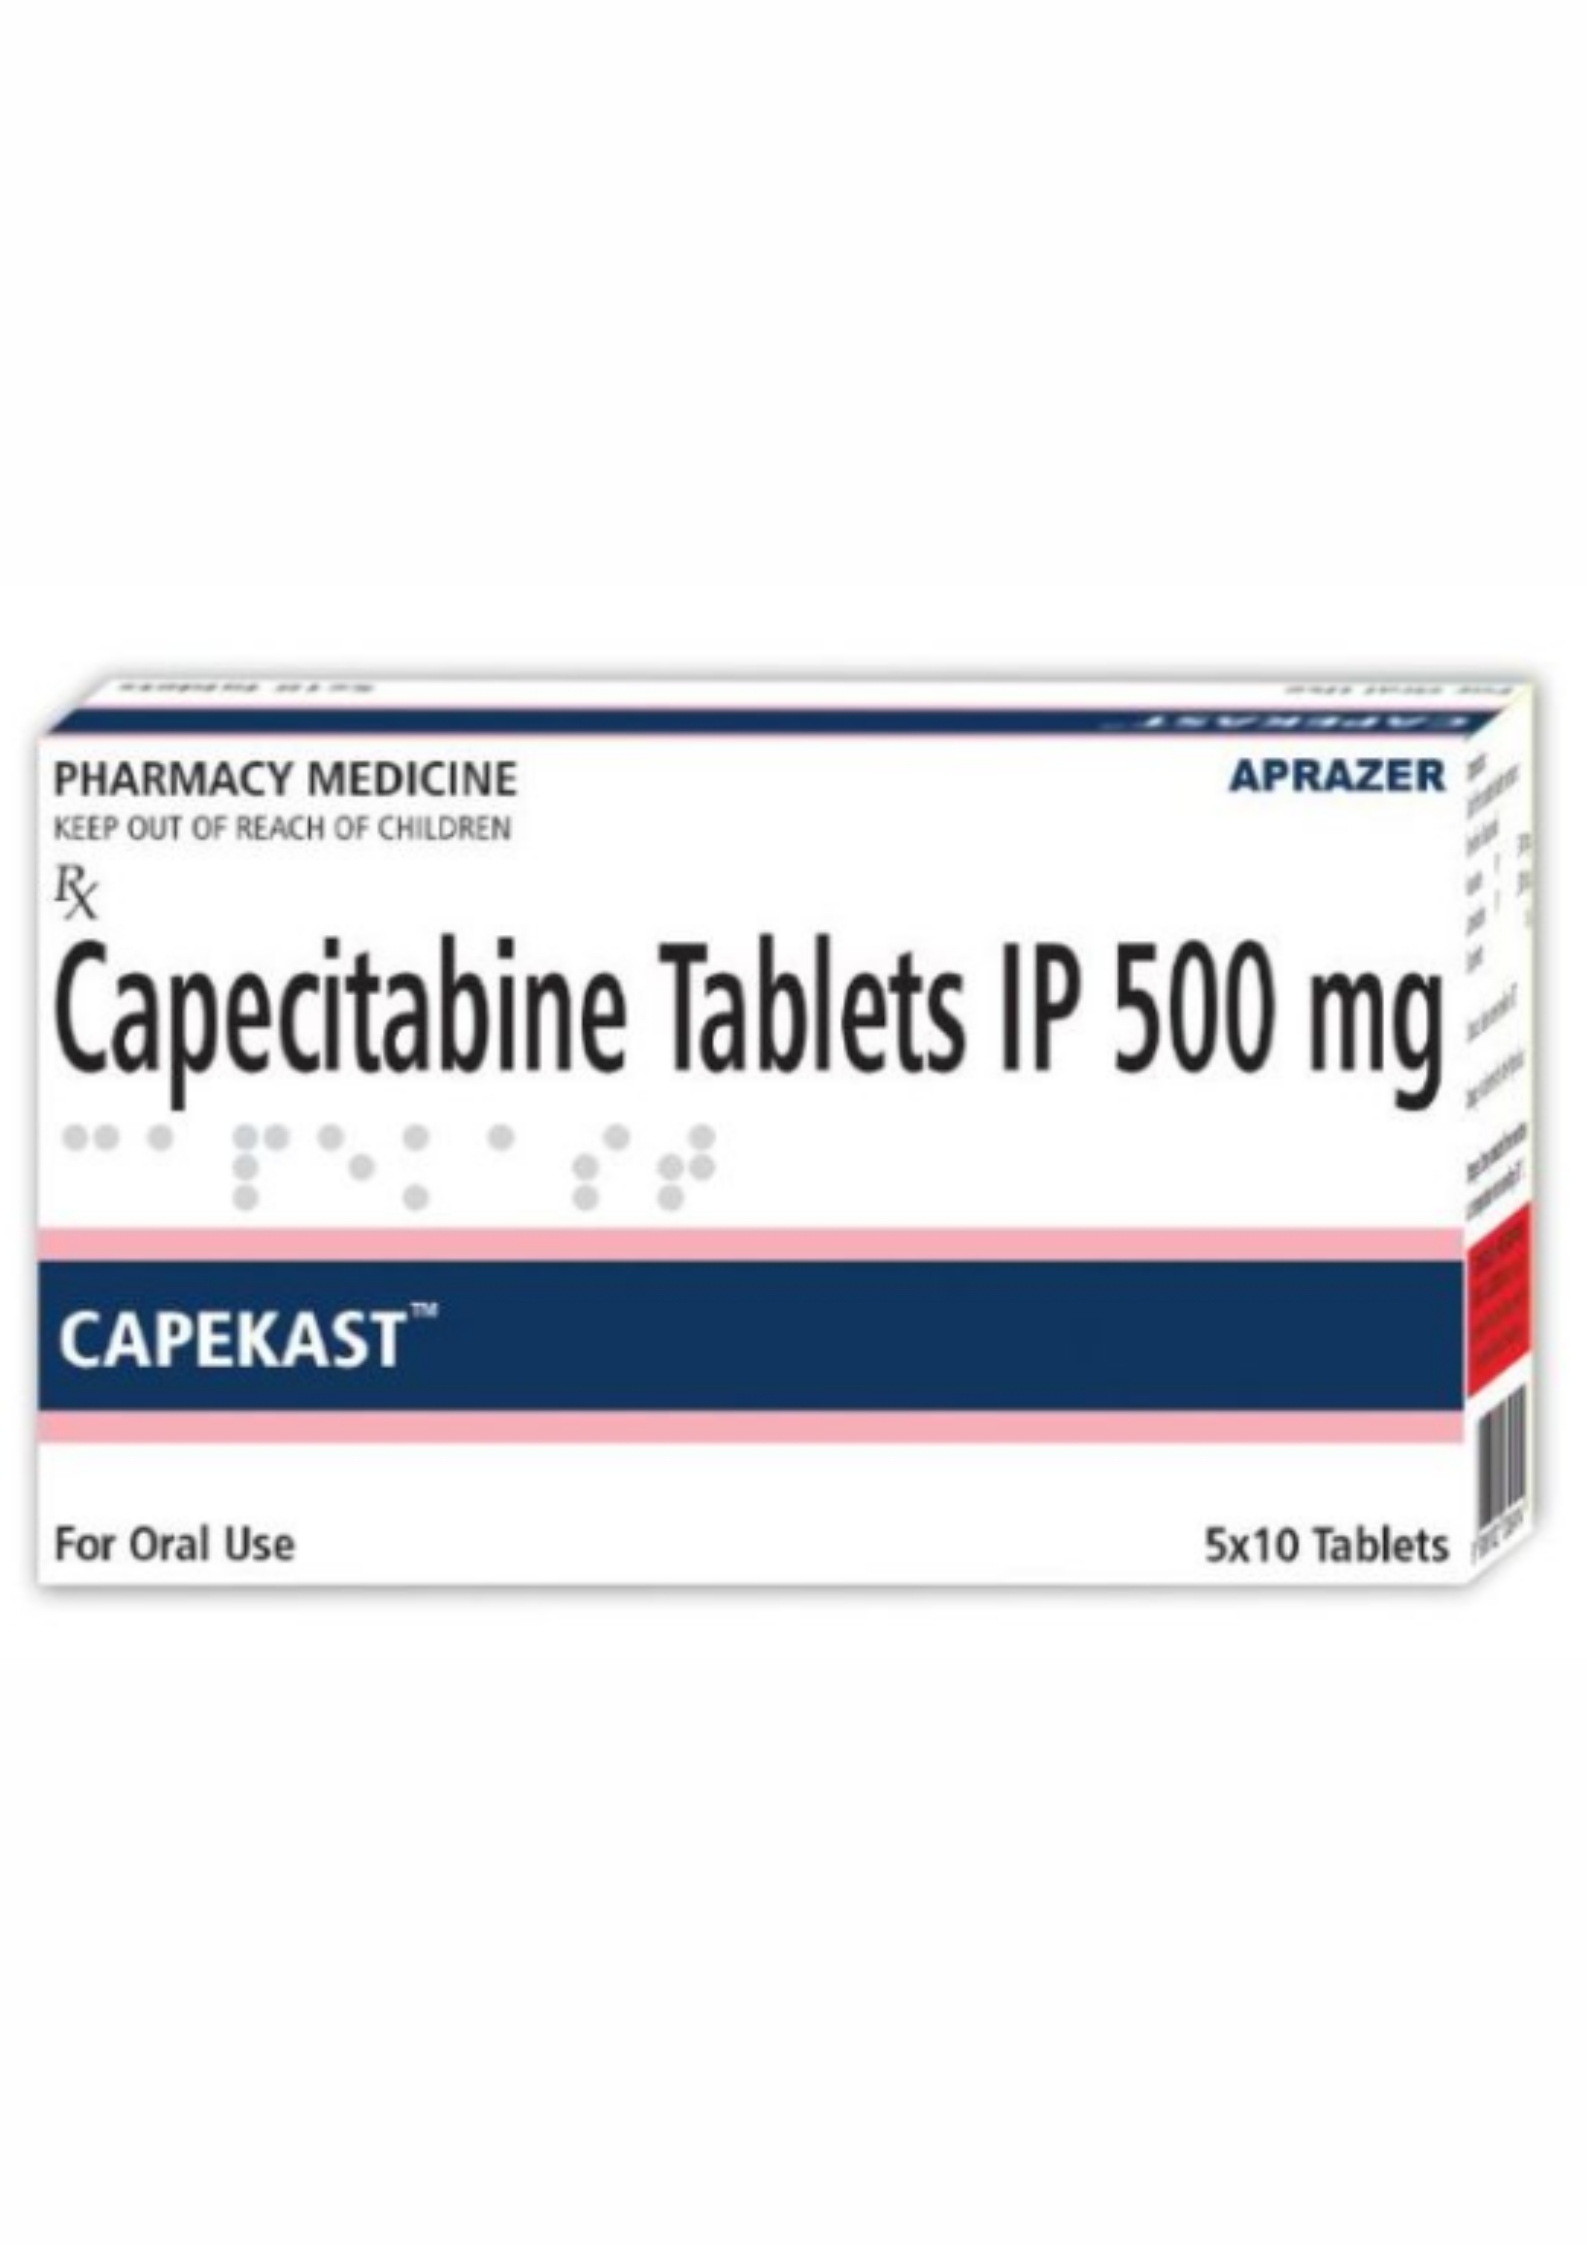 capekast capecitabine tablets